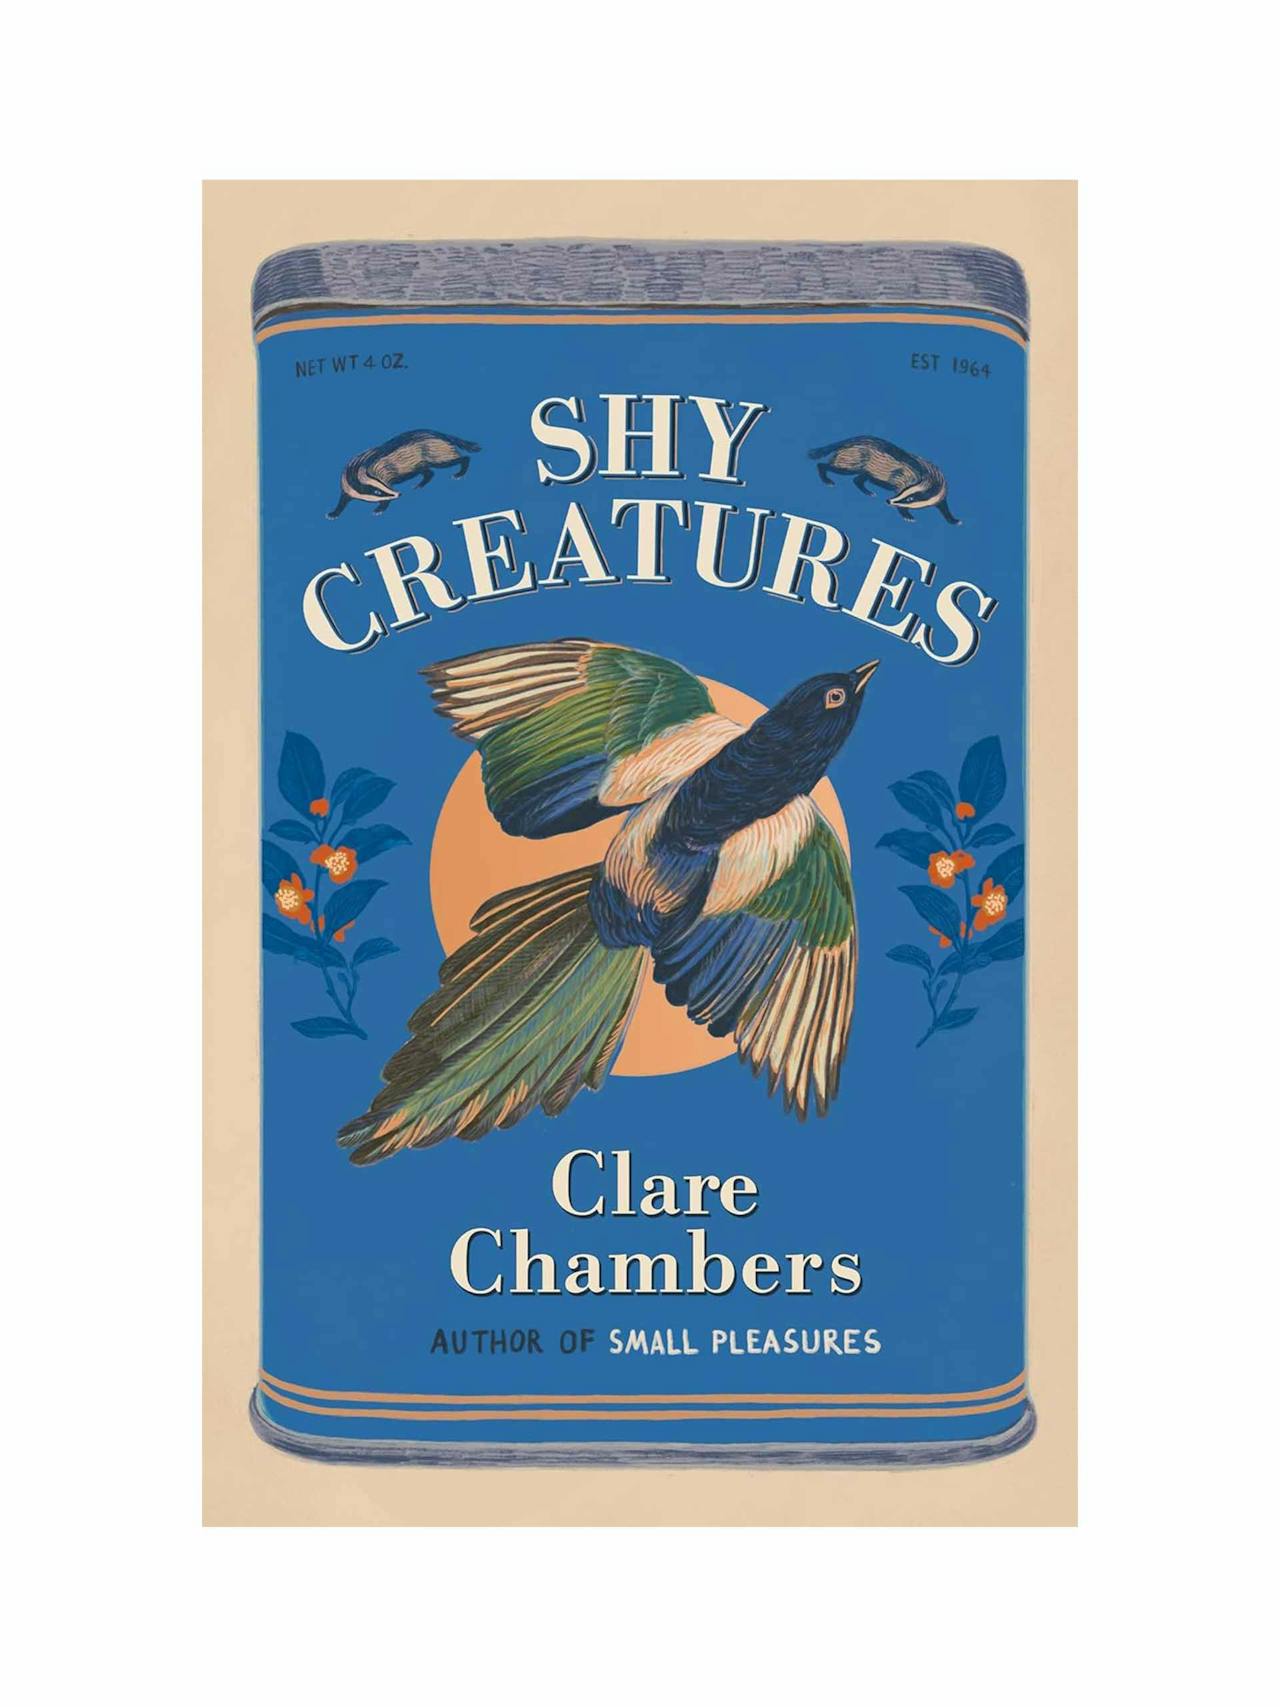 Clare Chambers